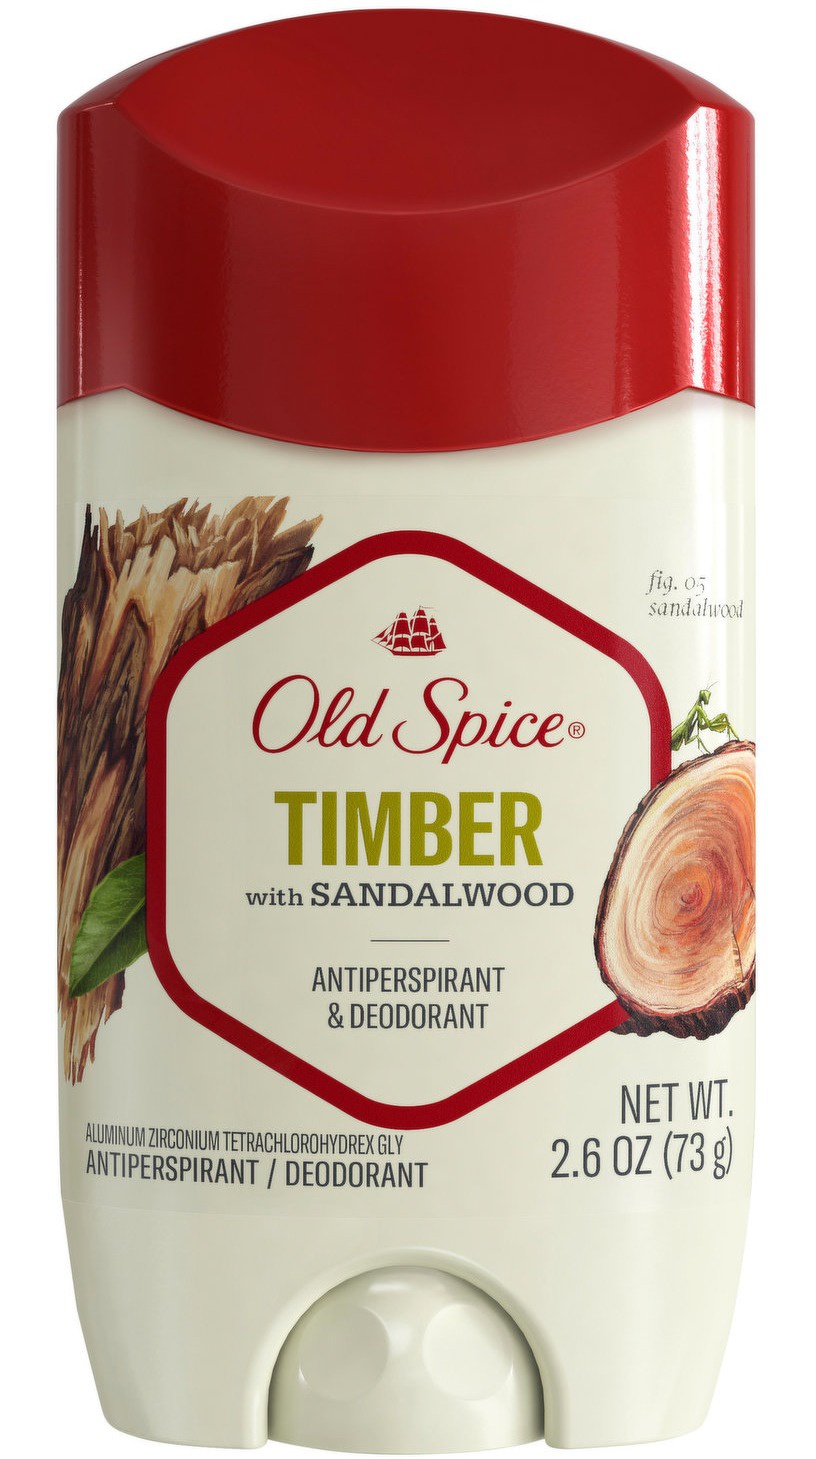 Old Spice Timber with Sandalwood Antiperspirant & Deodorant